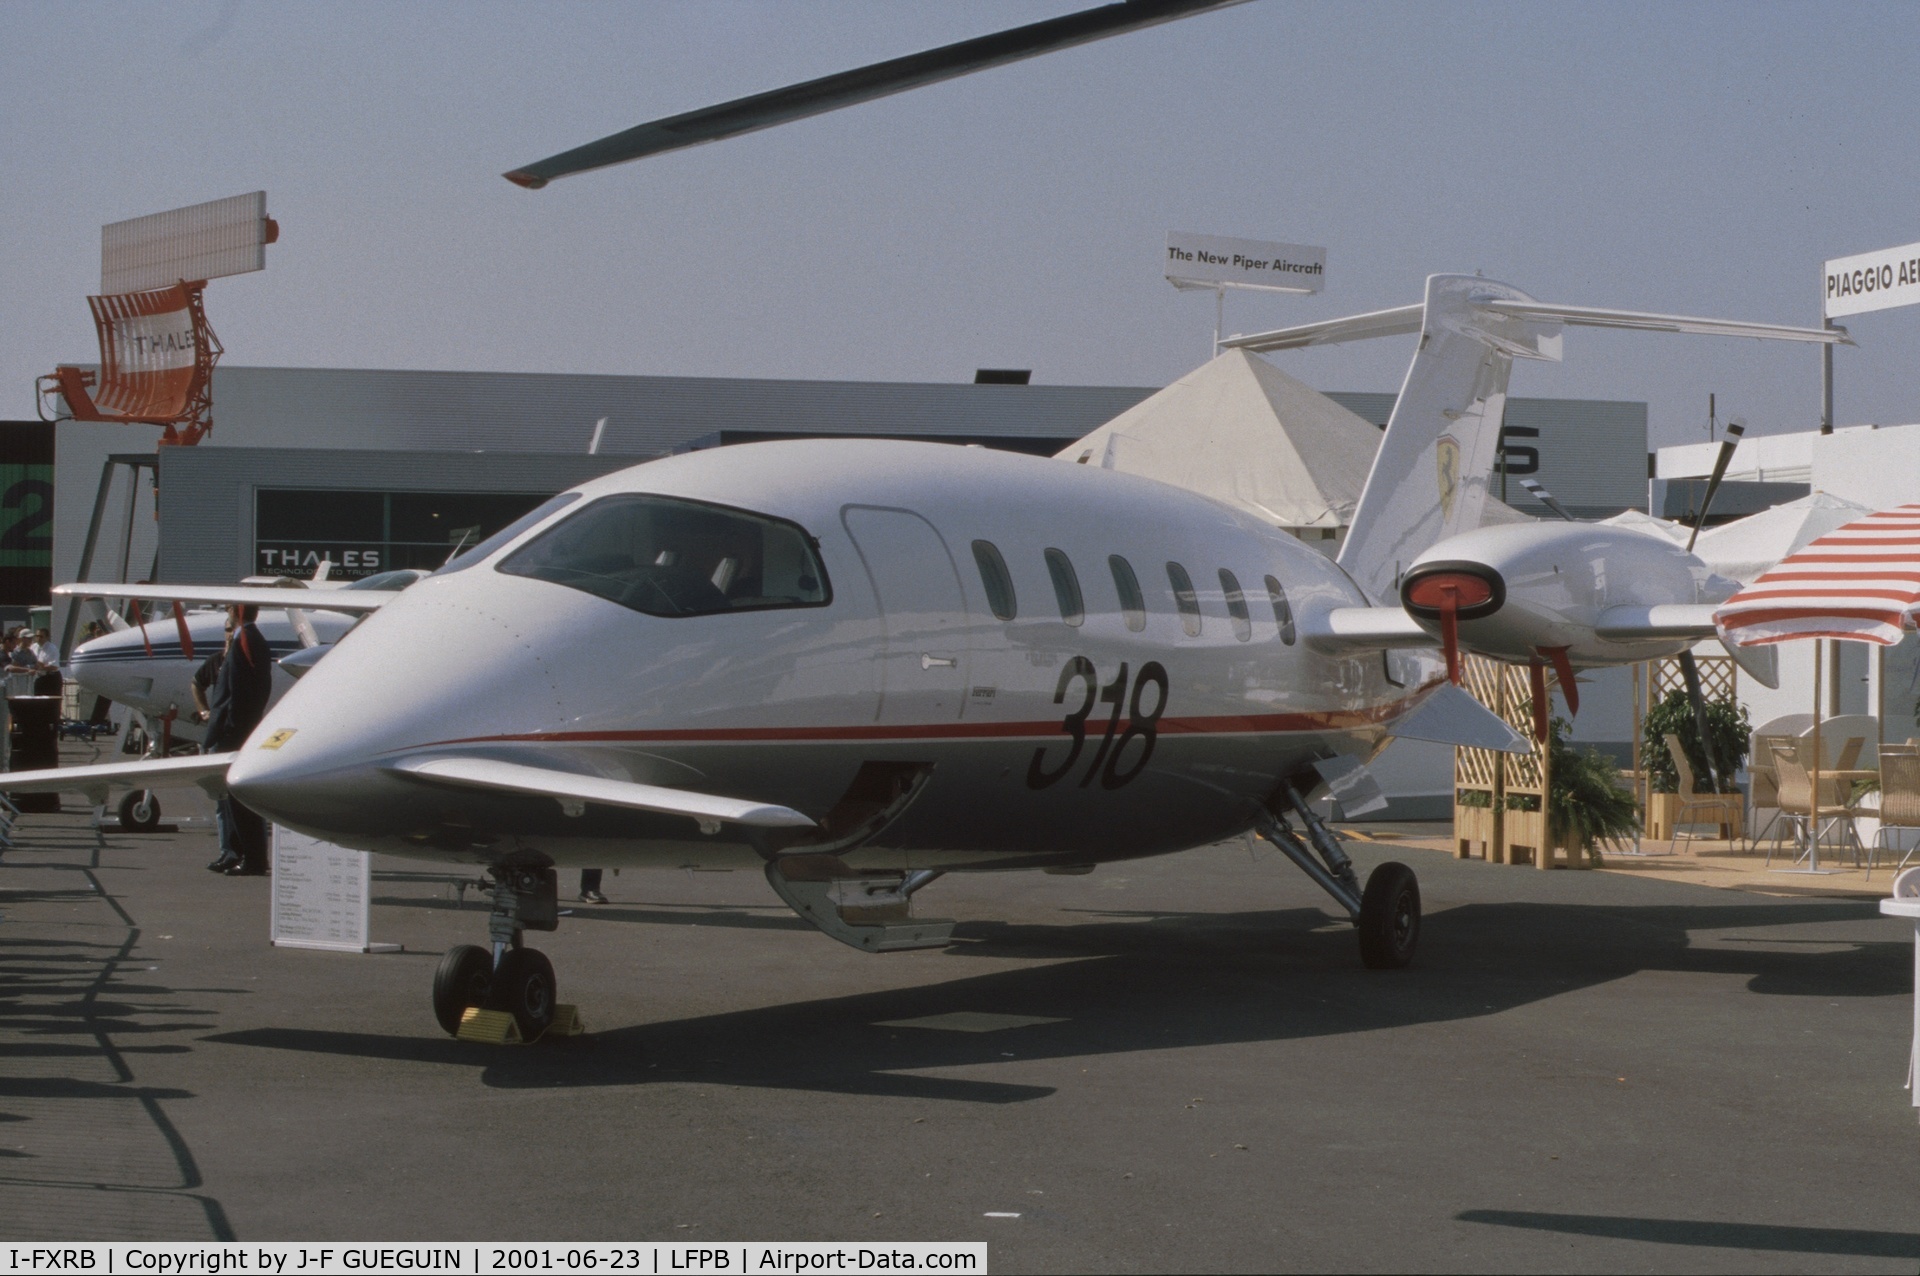 I-FXRB, 2000 Piaggio P-180 Avanti C/N 1035, On display at 2001 Paris-Le Bourget airshow.